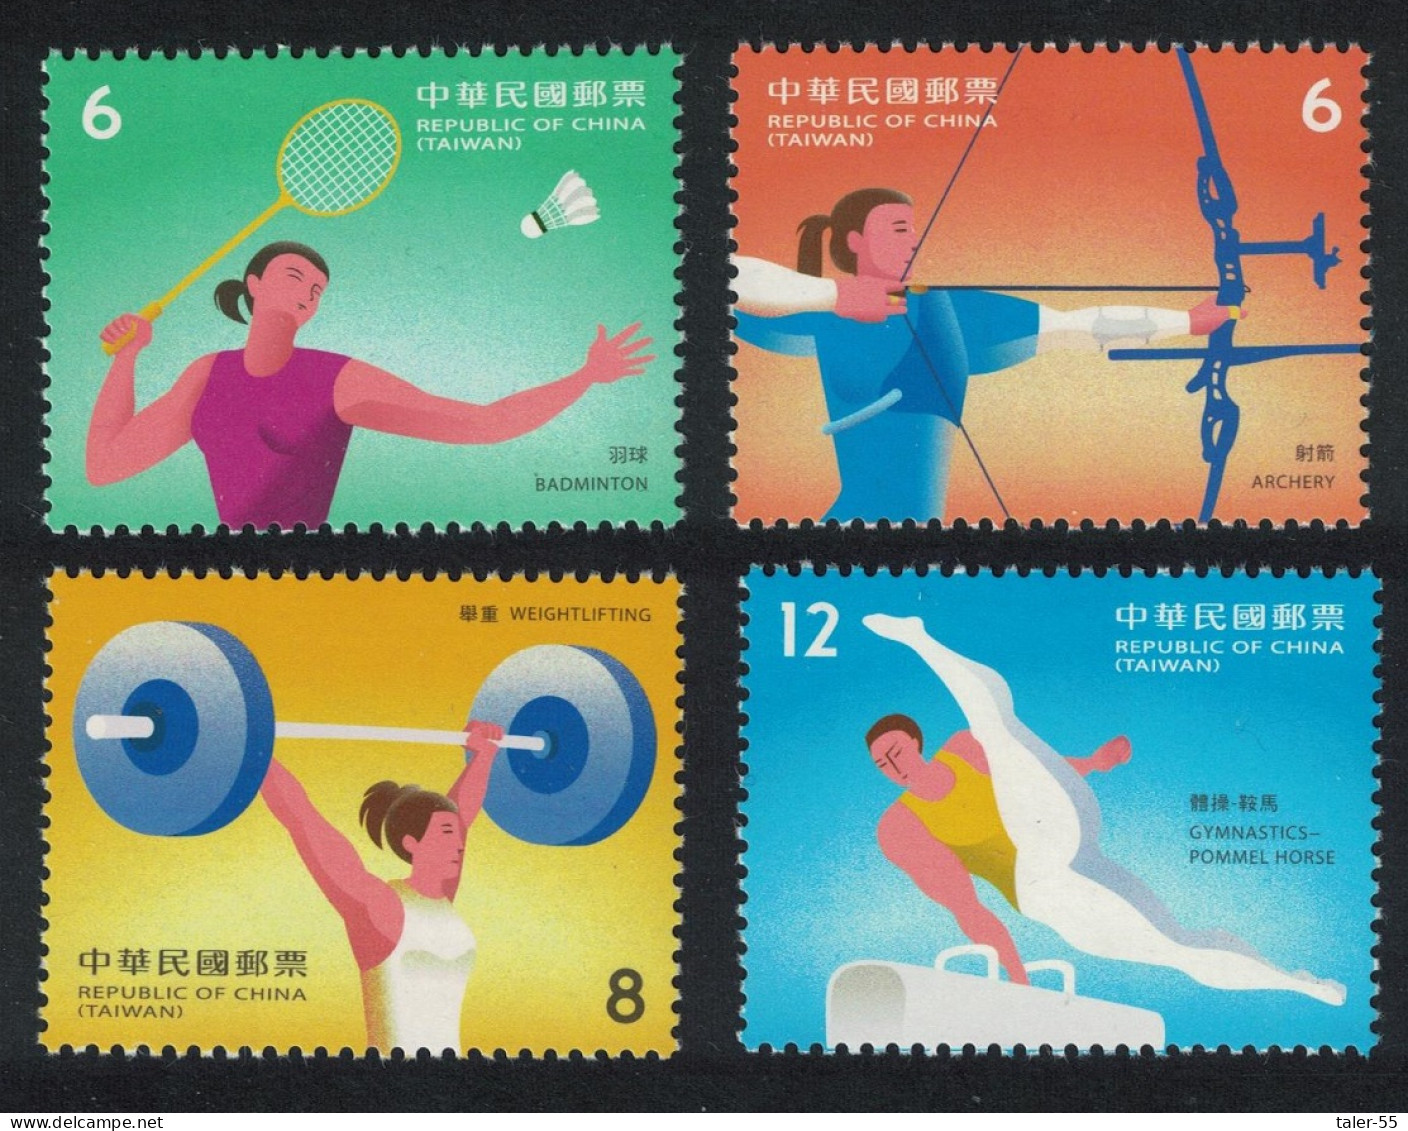 Taiwan Badminton Archery Weightlifting Sports 4v 2020 MNH - Nuevos